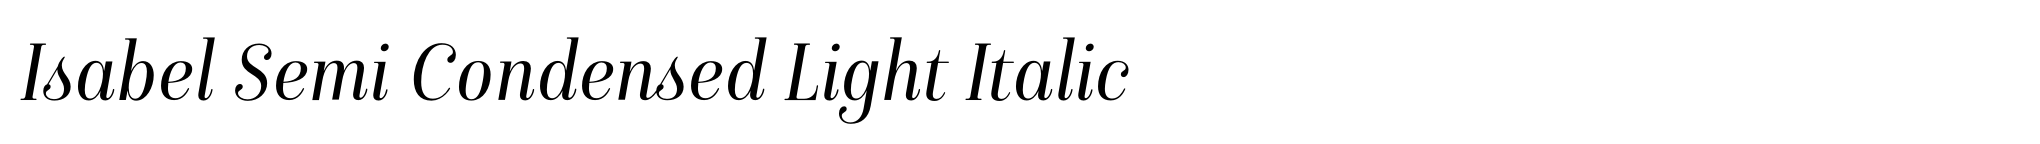 Isabel Semi Condensed Light Italic image